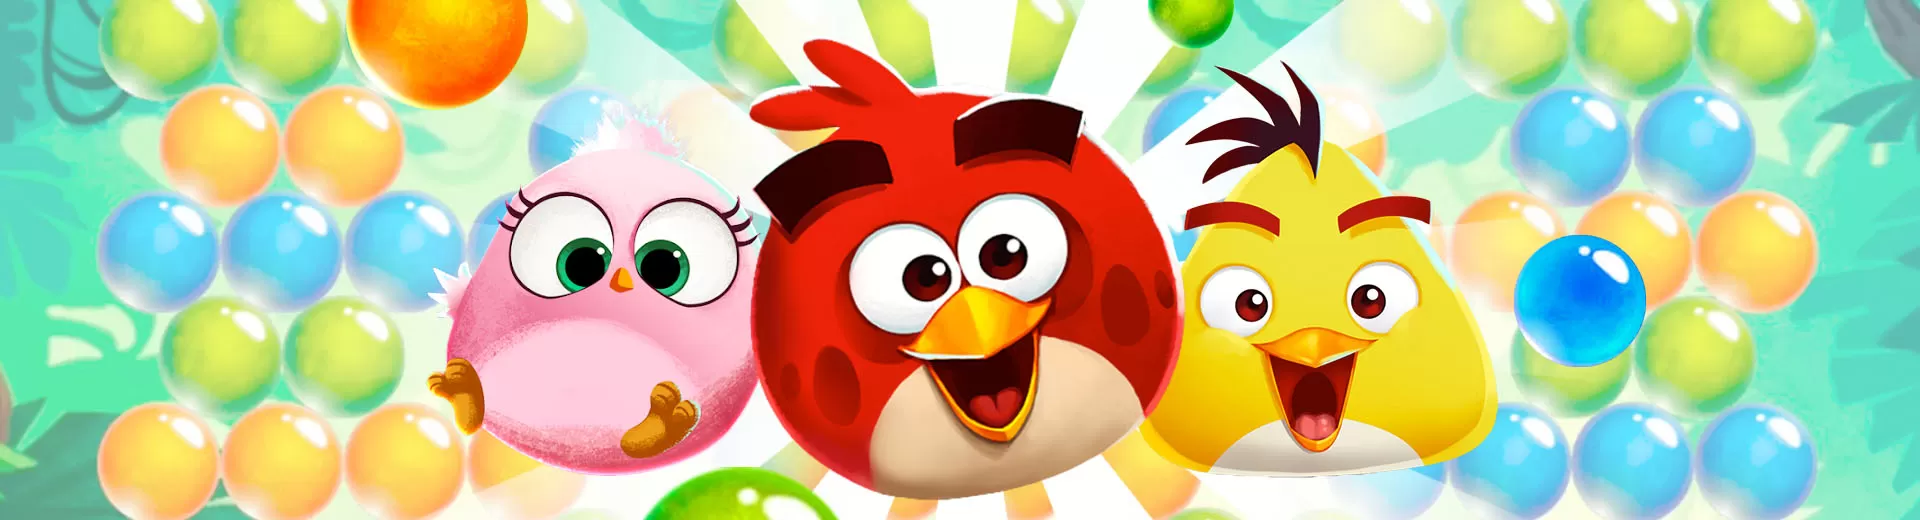 Angry Birds Pop Emulator Pc